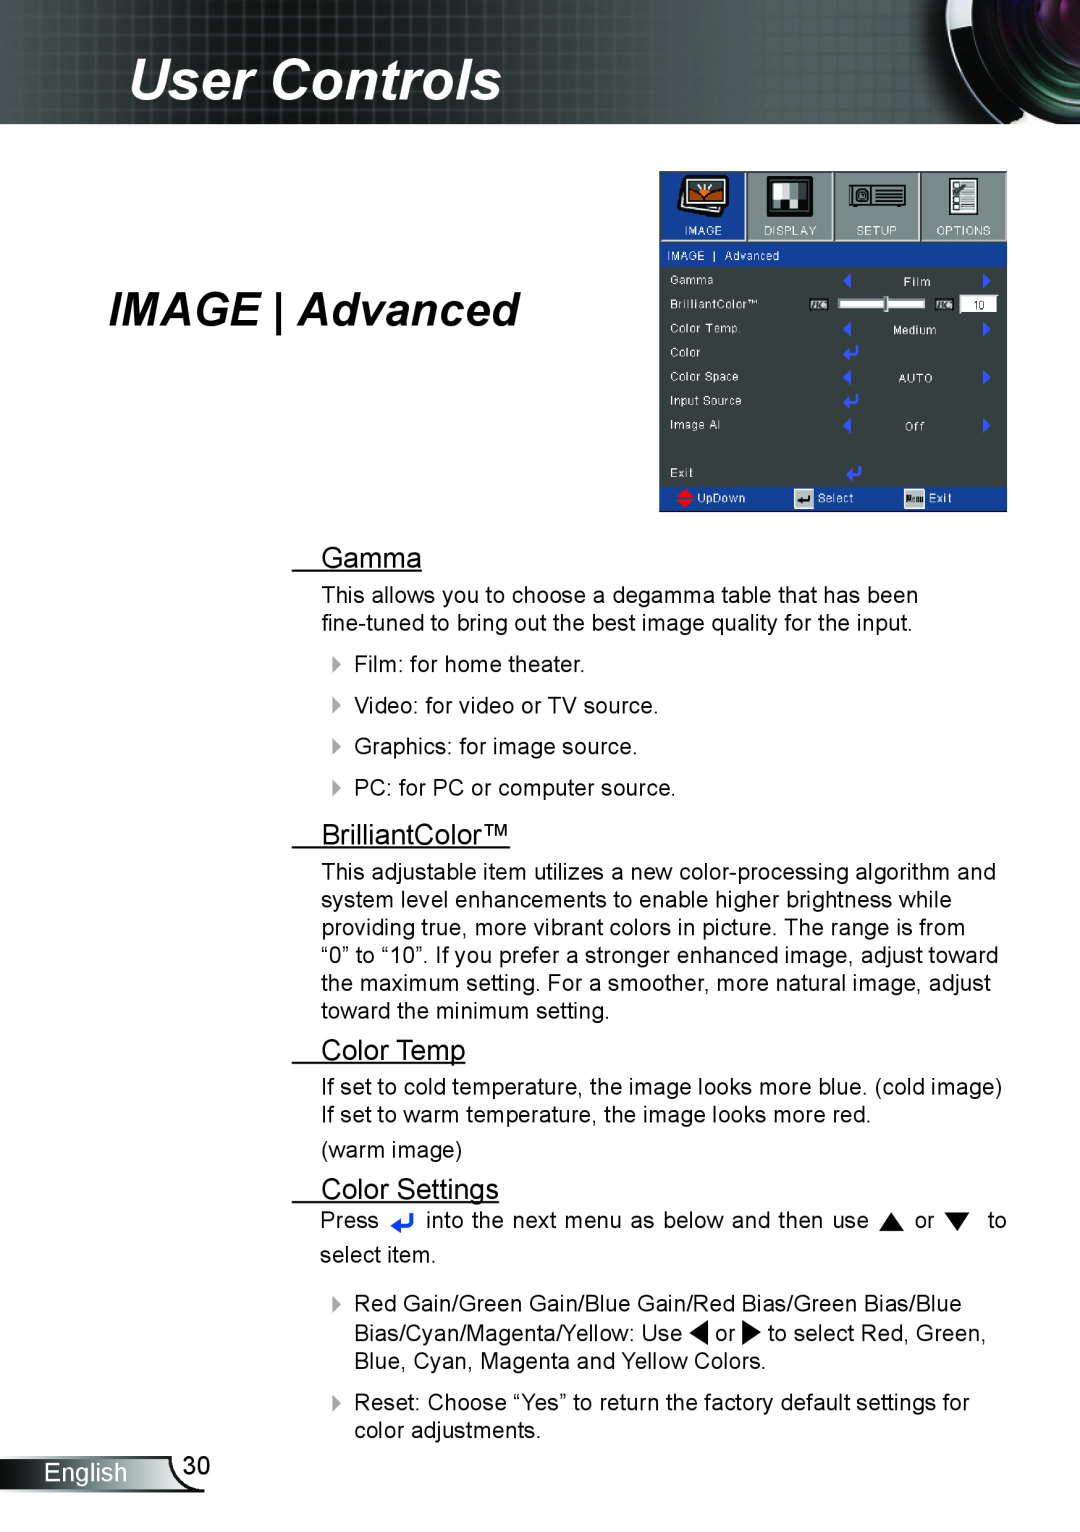 Optoma Technology TW695UT3D IMAGE Advanced, Gamma, BrilliantColor, Color Temp, Color Settings, User Controls, English 